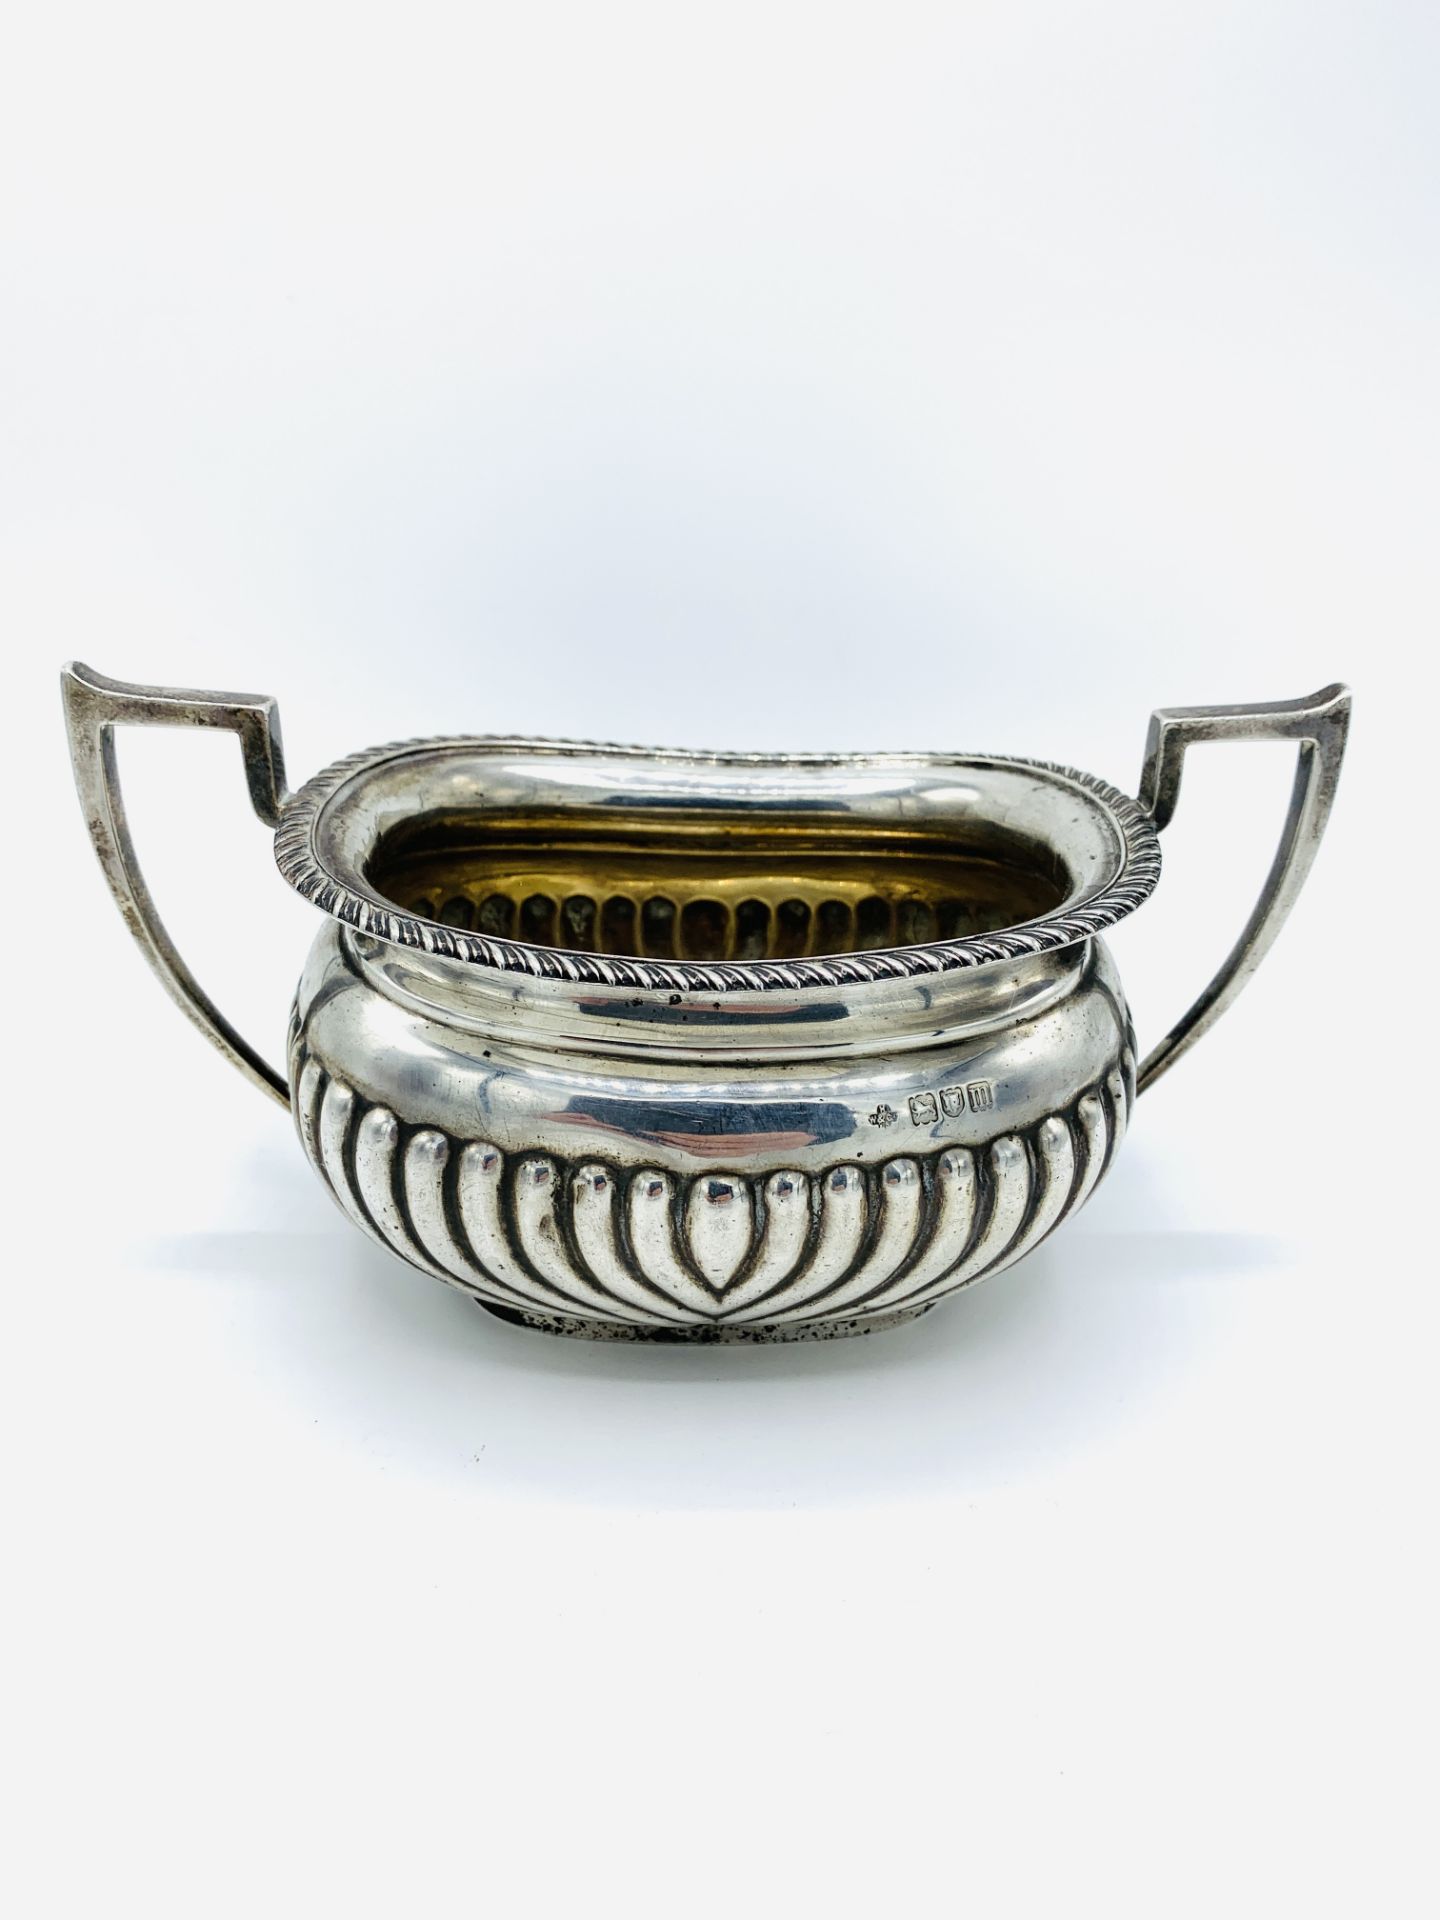 Large silver creamer and sugar bowl - Image 3 of 5